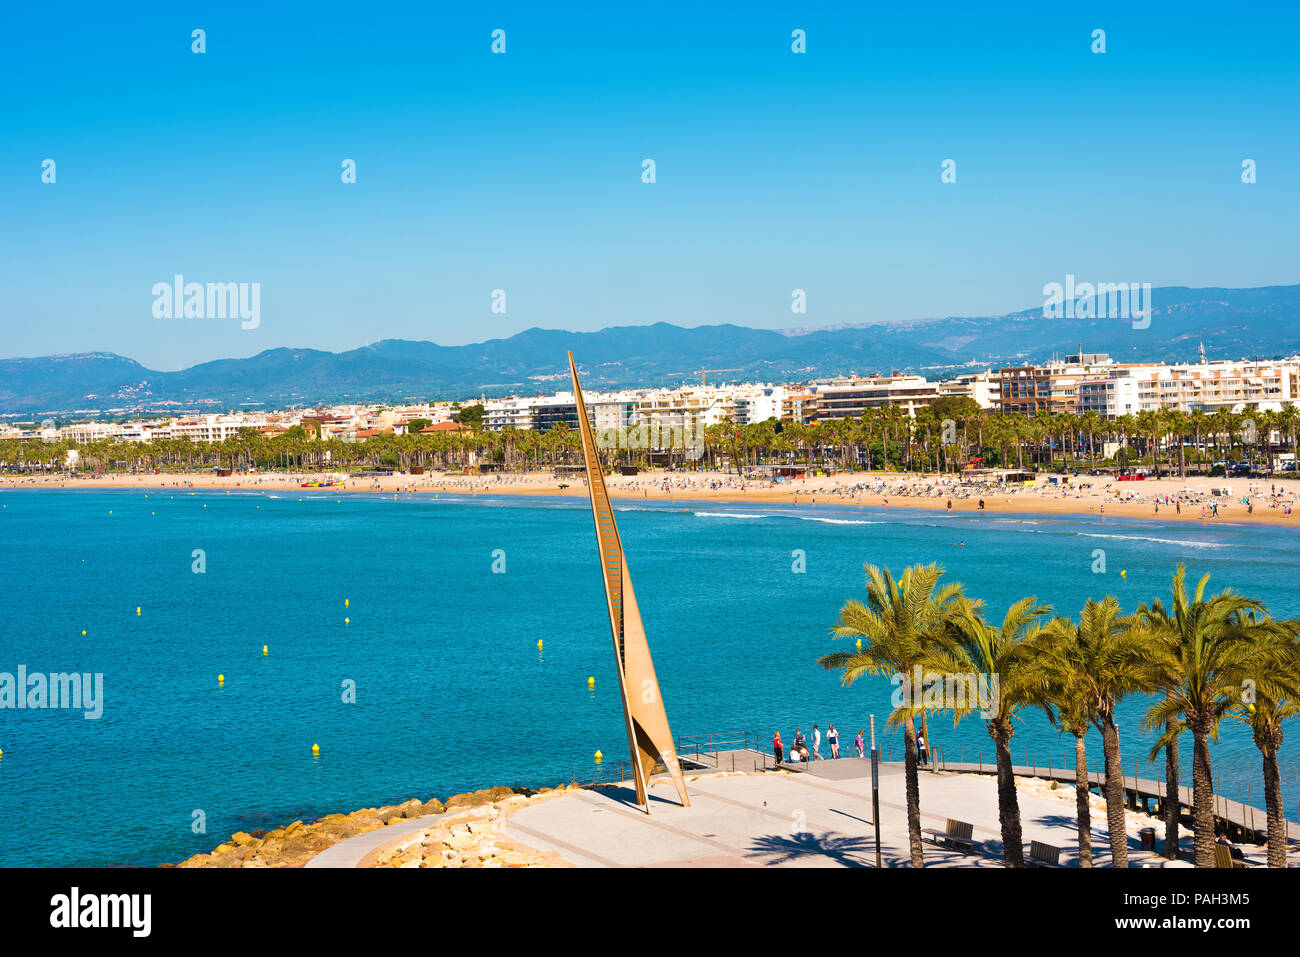 SALOU, Tarragona, Espagne - le 24 avril, 2017 Côte : Costa Dorada, plage principale de Salou. Ciel bleu. Copy space Banque D'Images